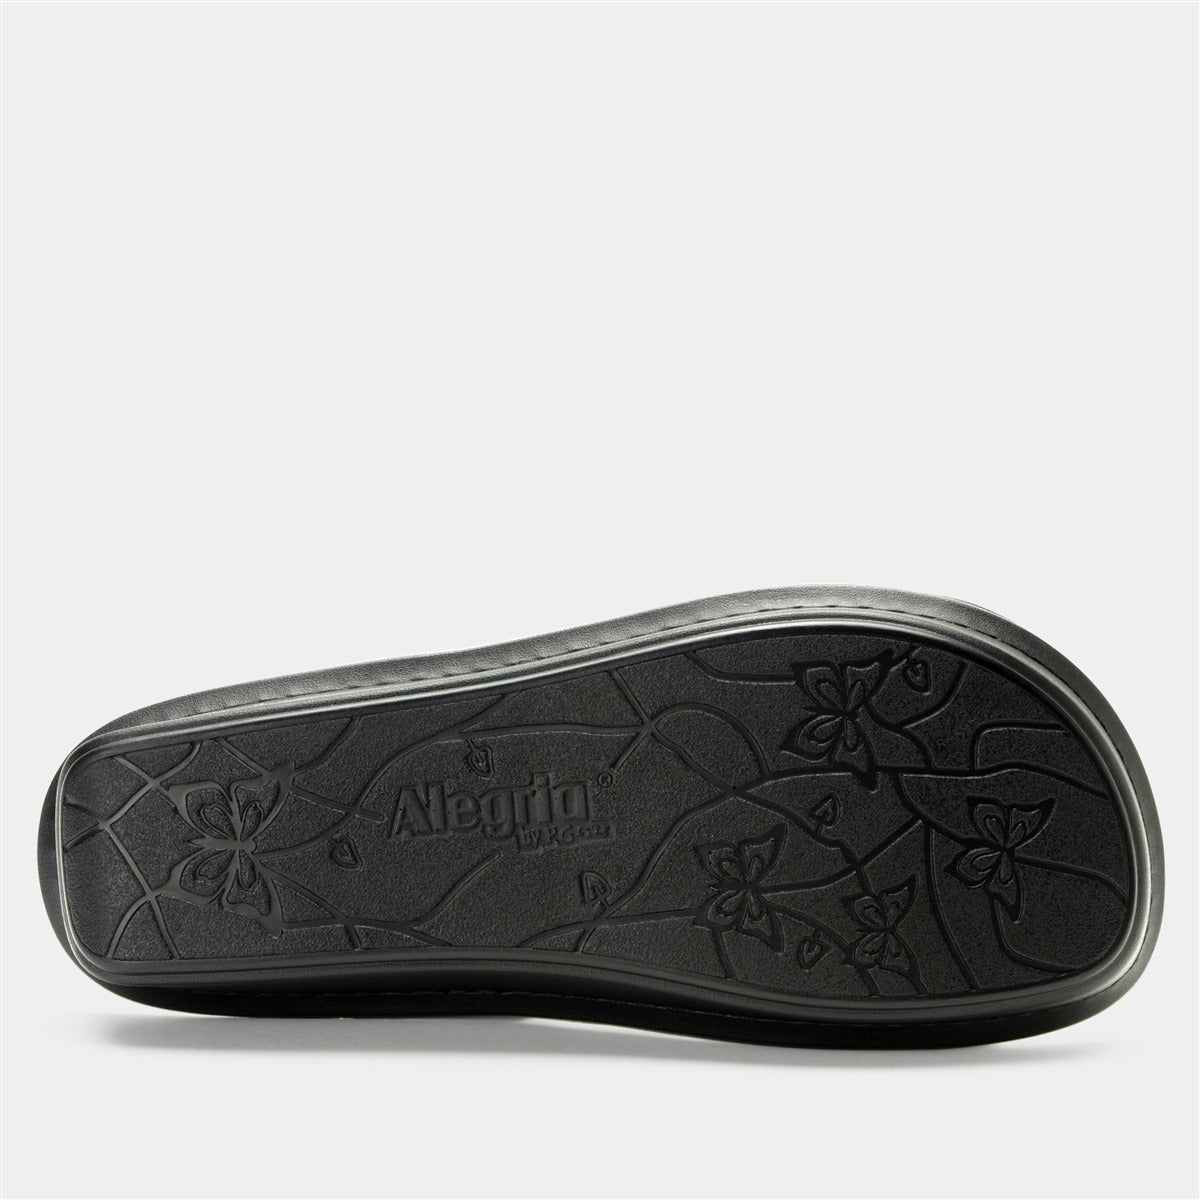 Verona | Leather | Basketry Black - Sandals - Alegria